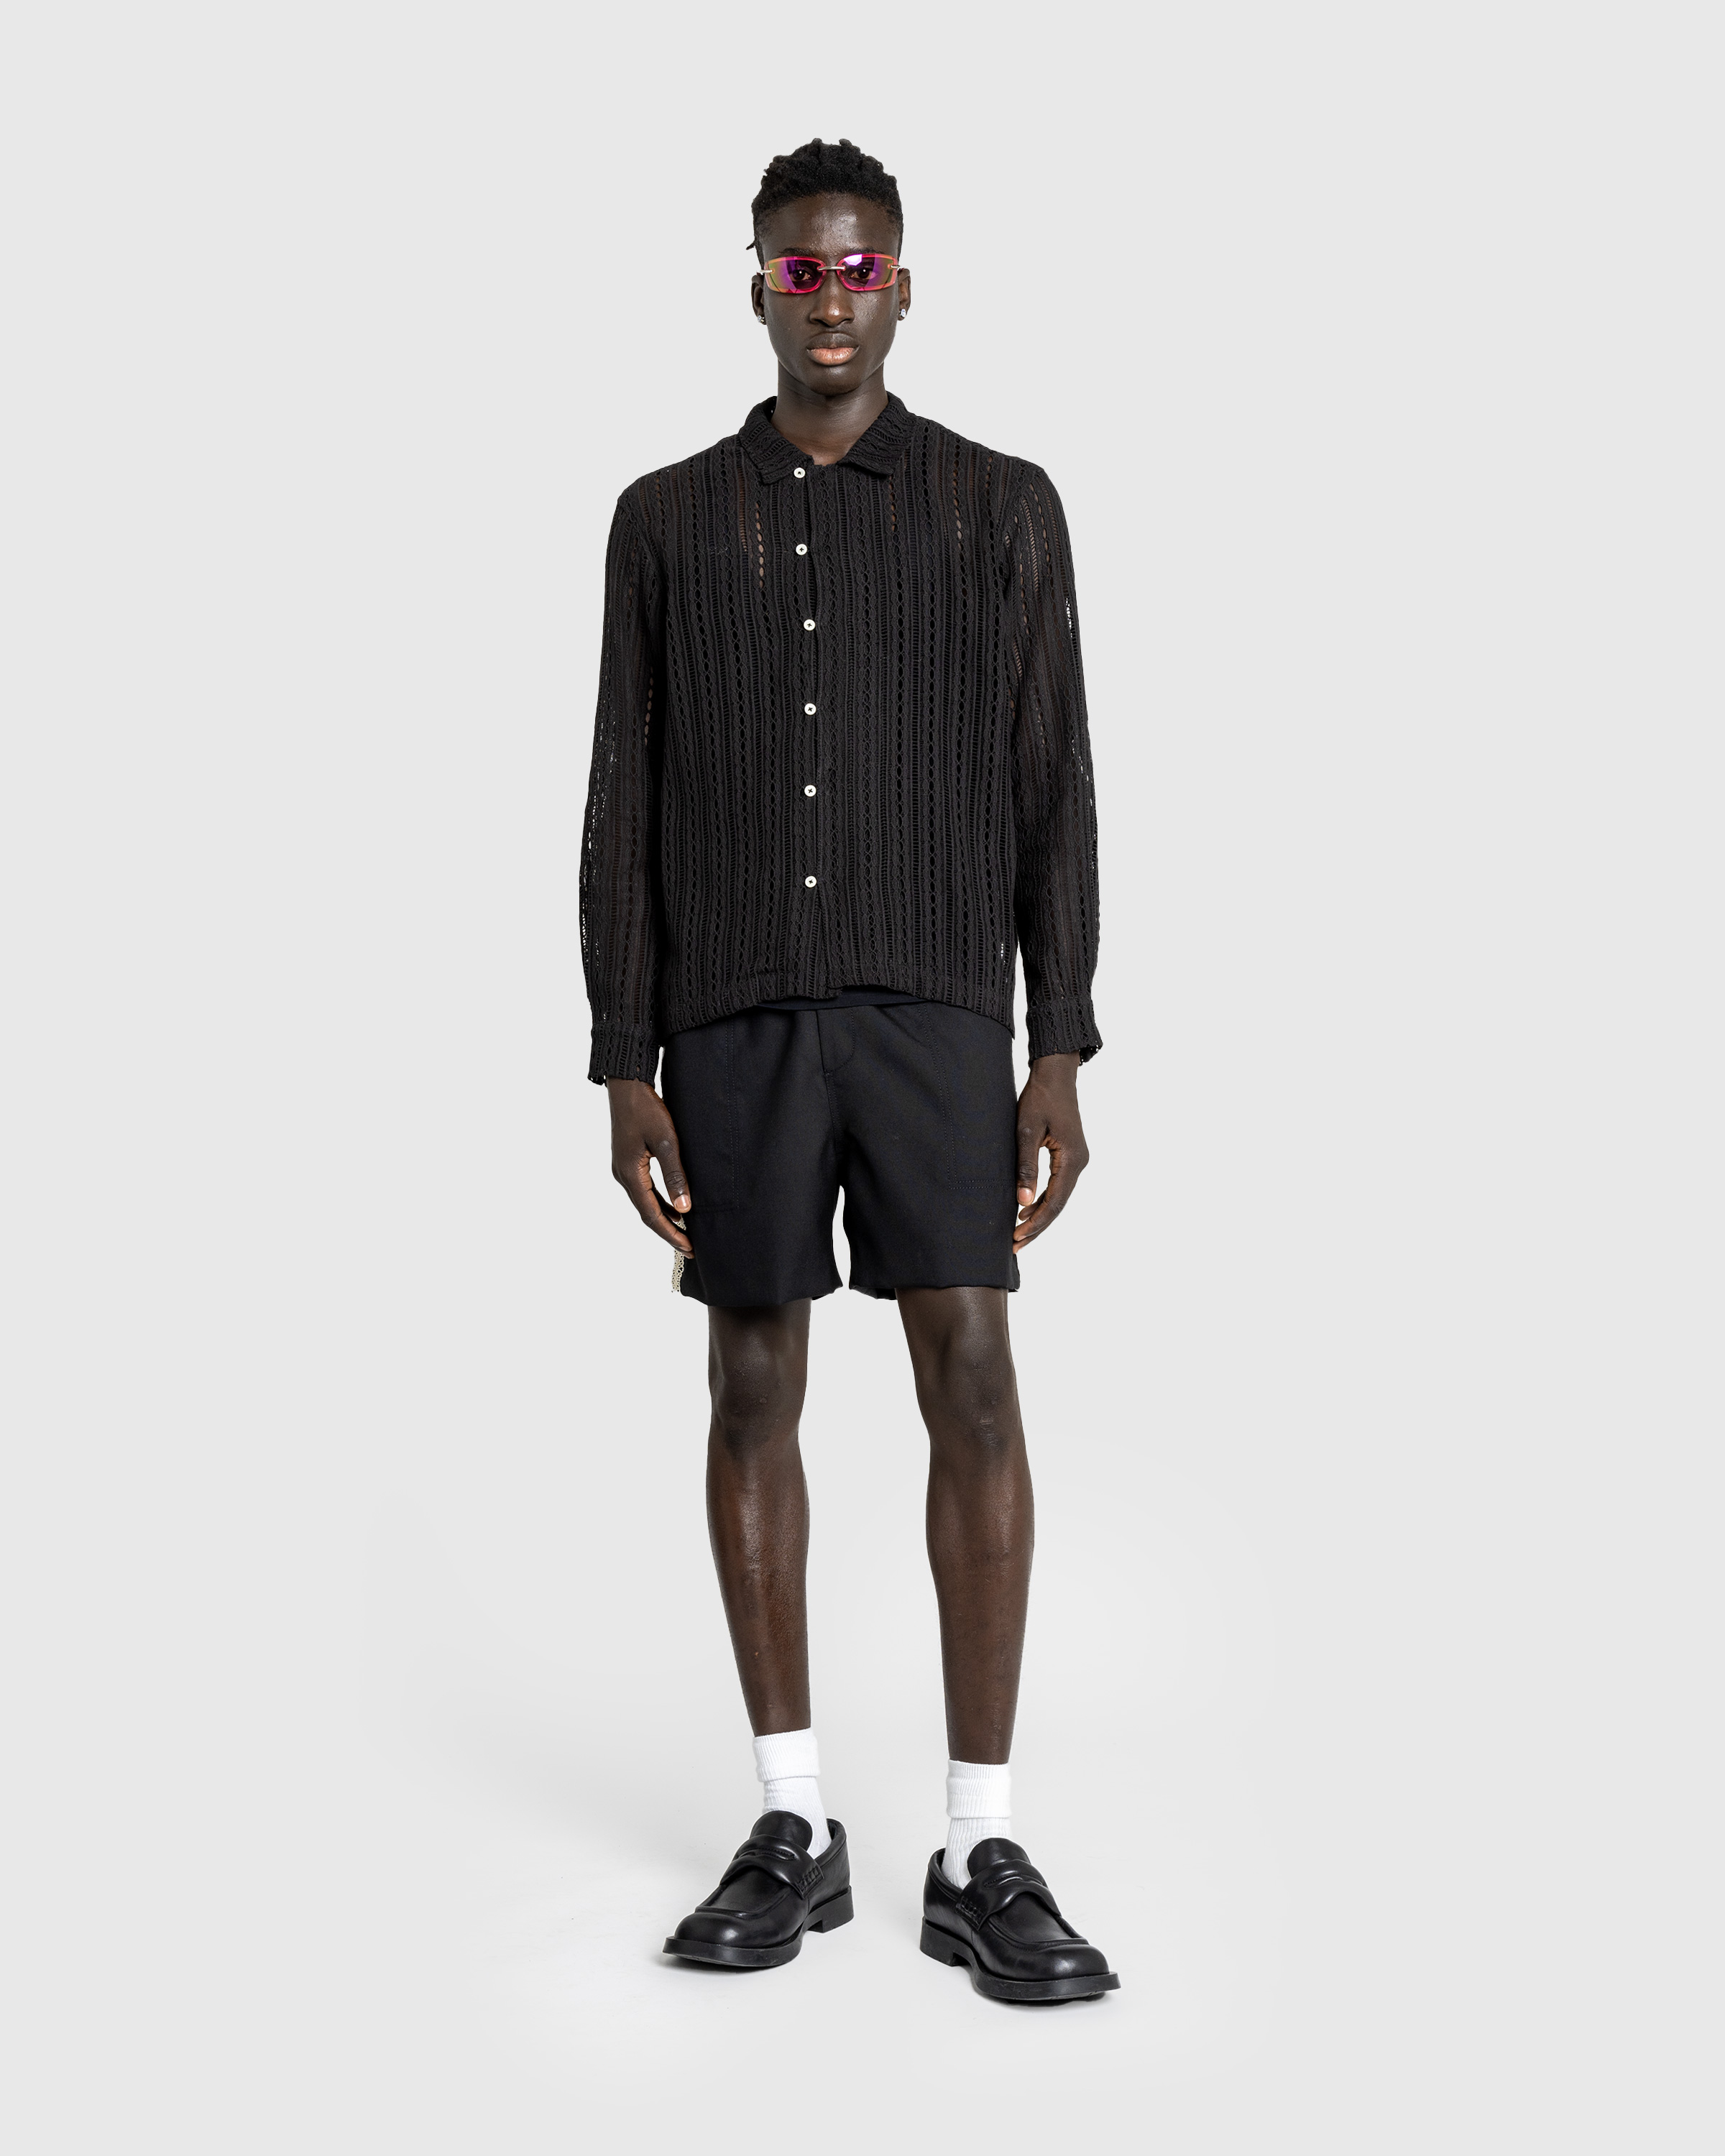 Bode – Lacework Shorts Black - Short Cuts - Black - Image 3